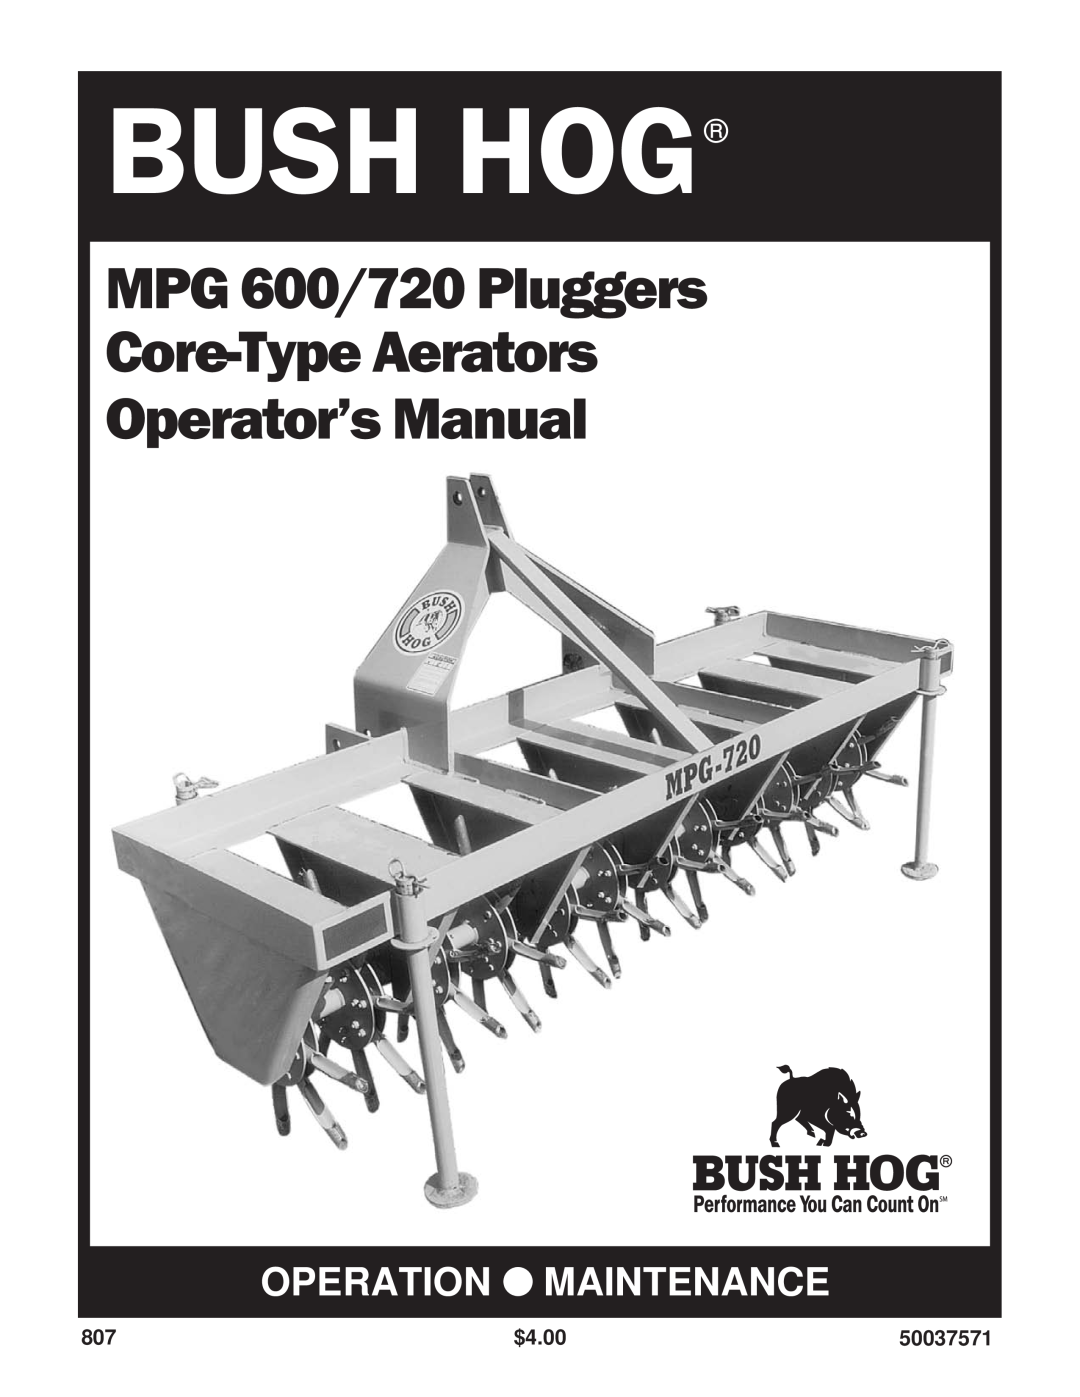 Bush Hog manual $4.00, 50037571, Bush Hog, MPG 600/720 Pluggers Core-Type Aerators Operator’s Manual 